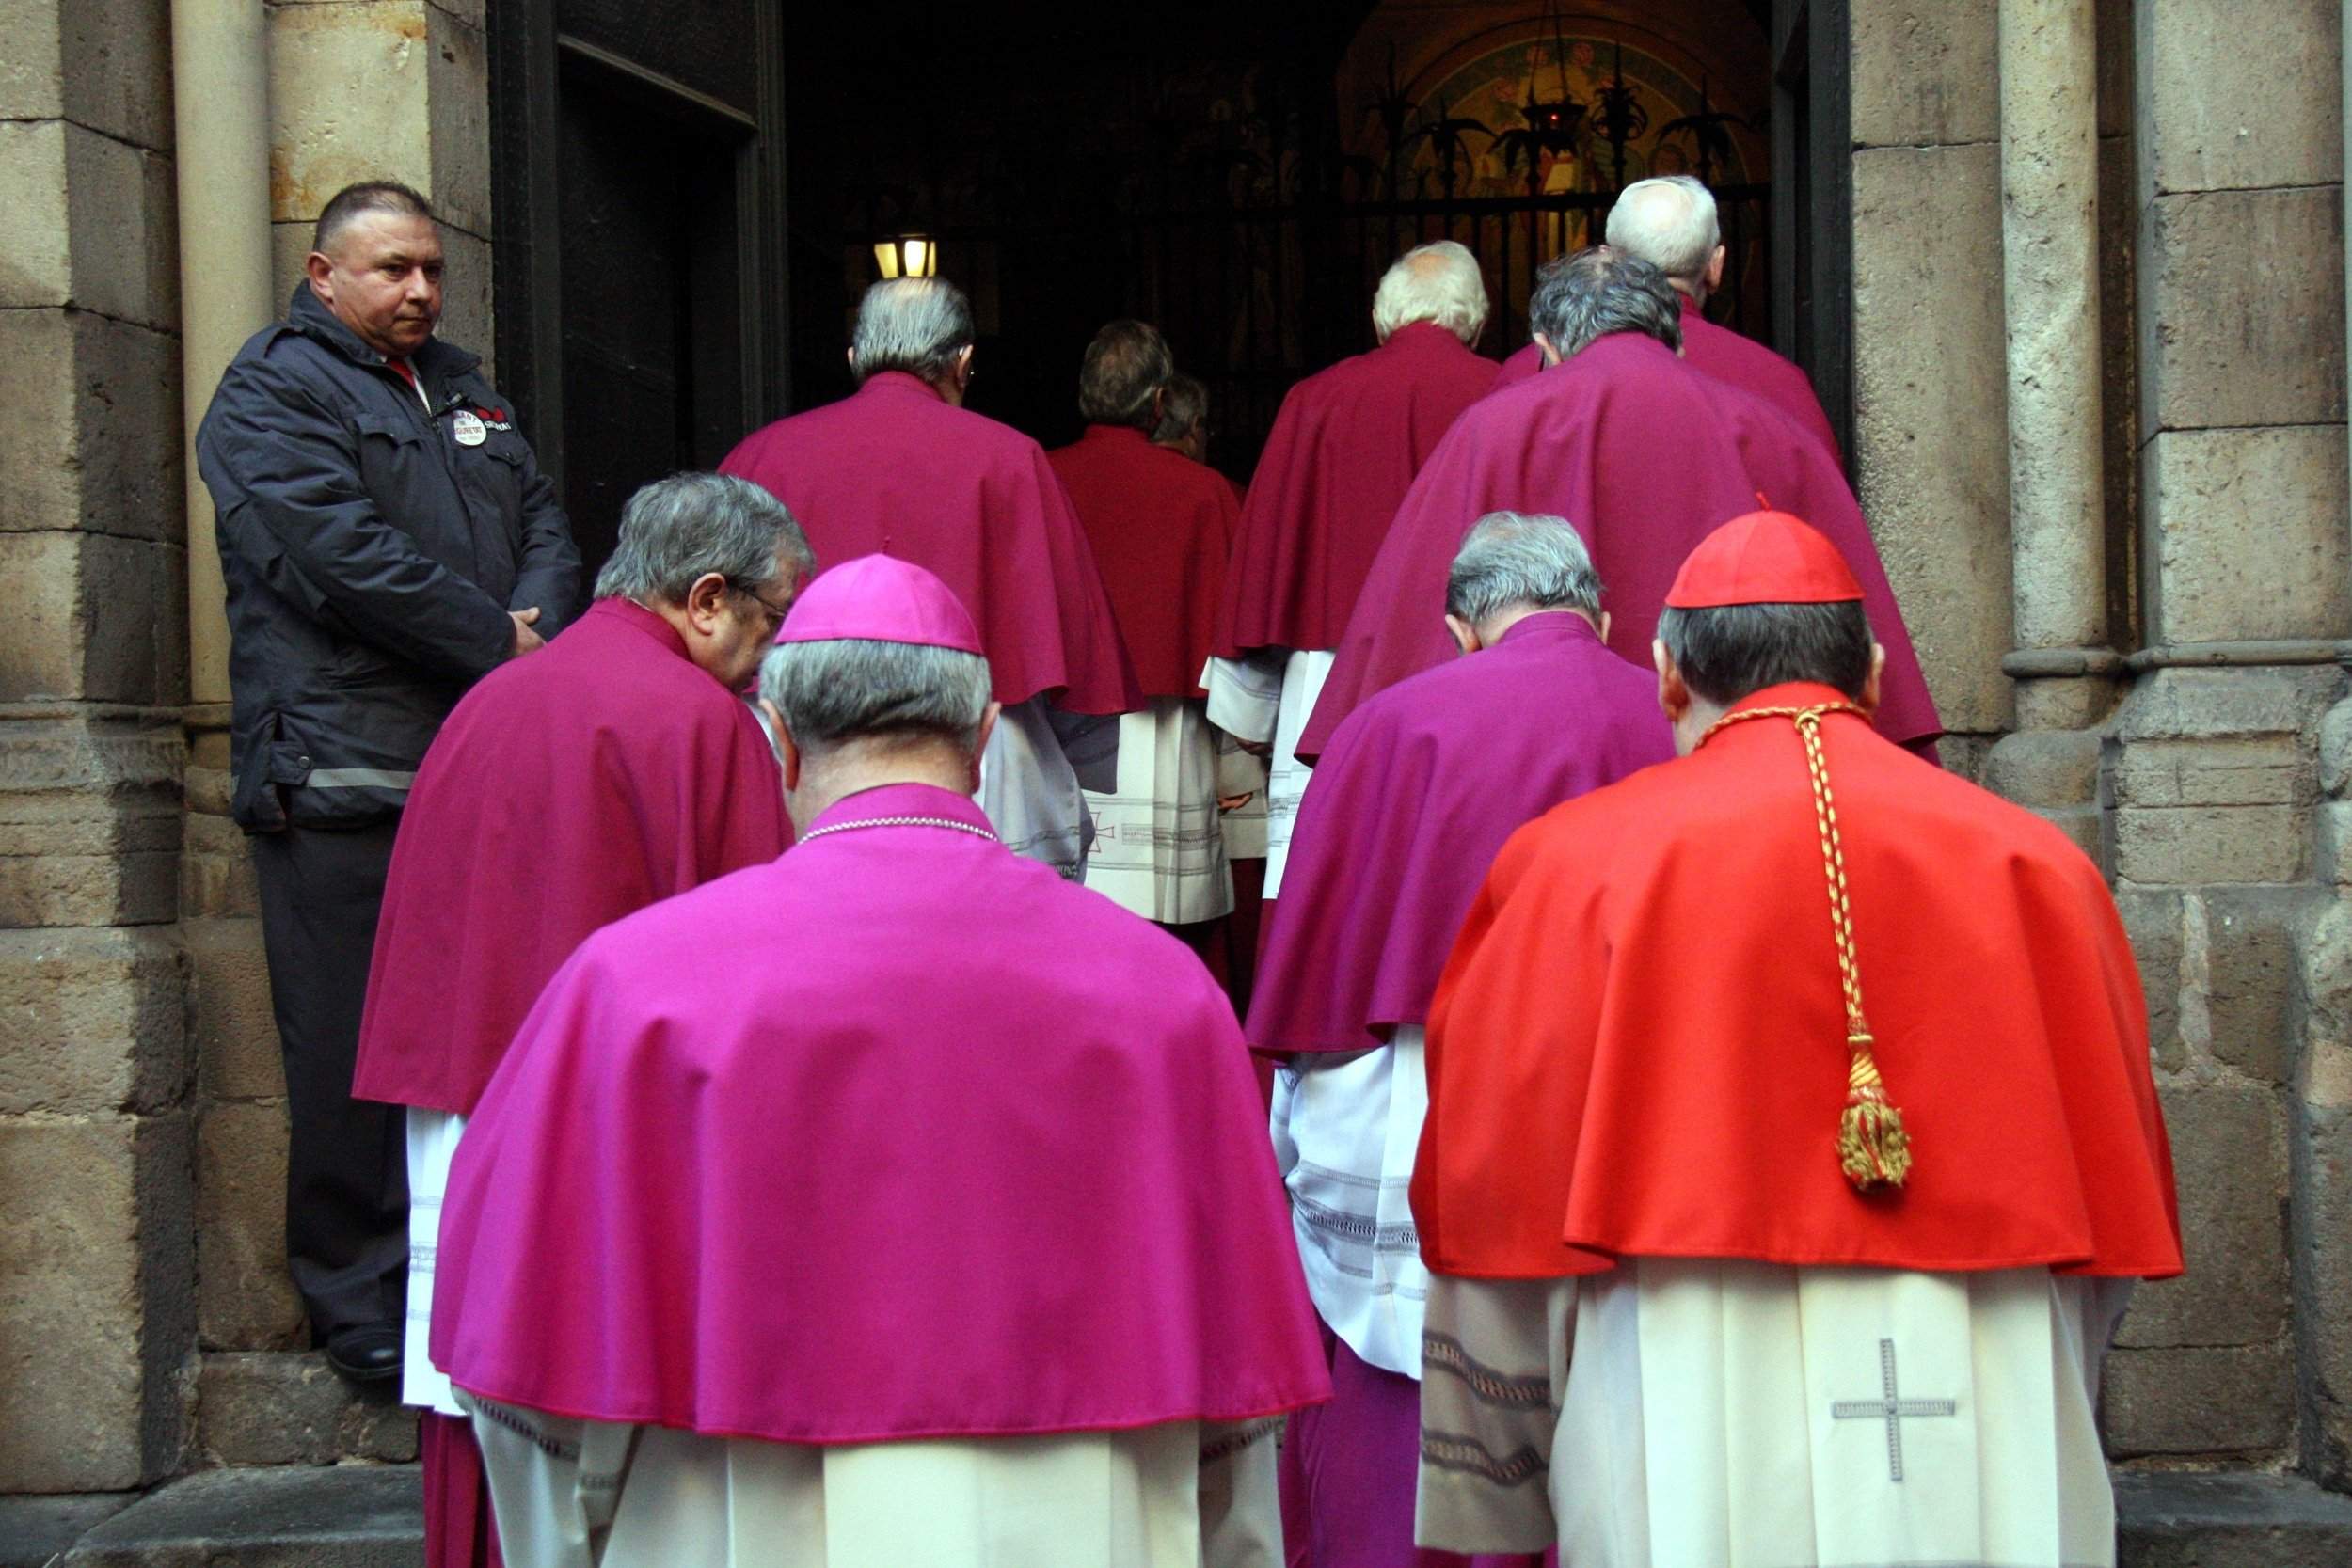 El cardenal Omella demana "bastir ponts"; el bisbe Pardo recorda els presos